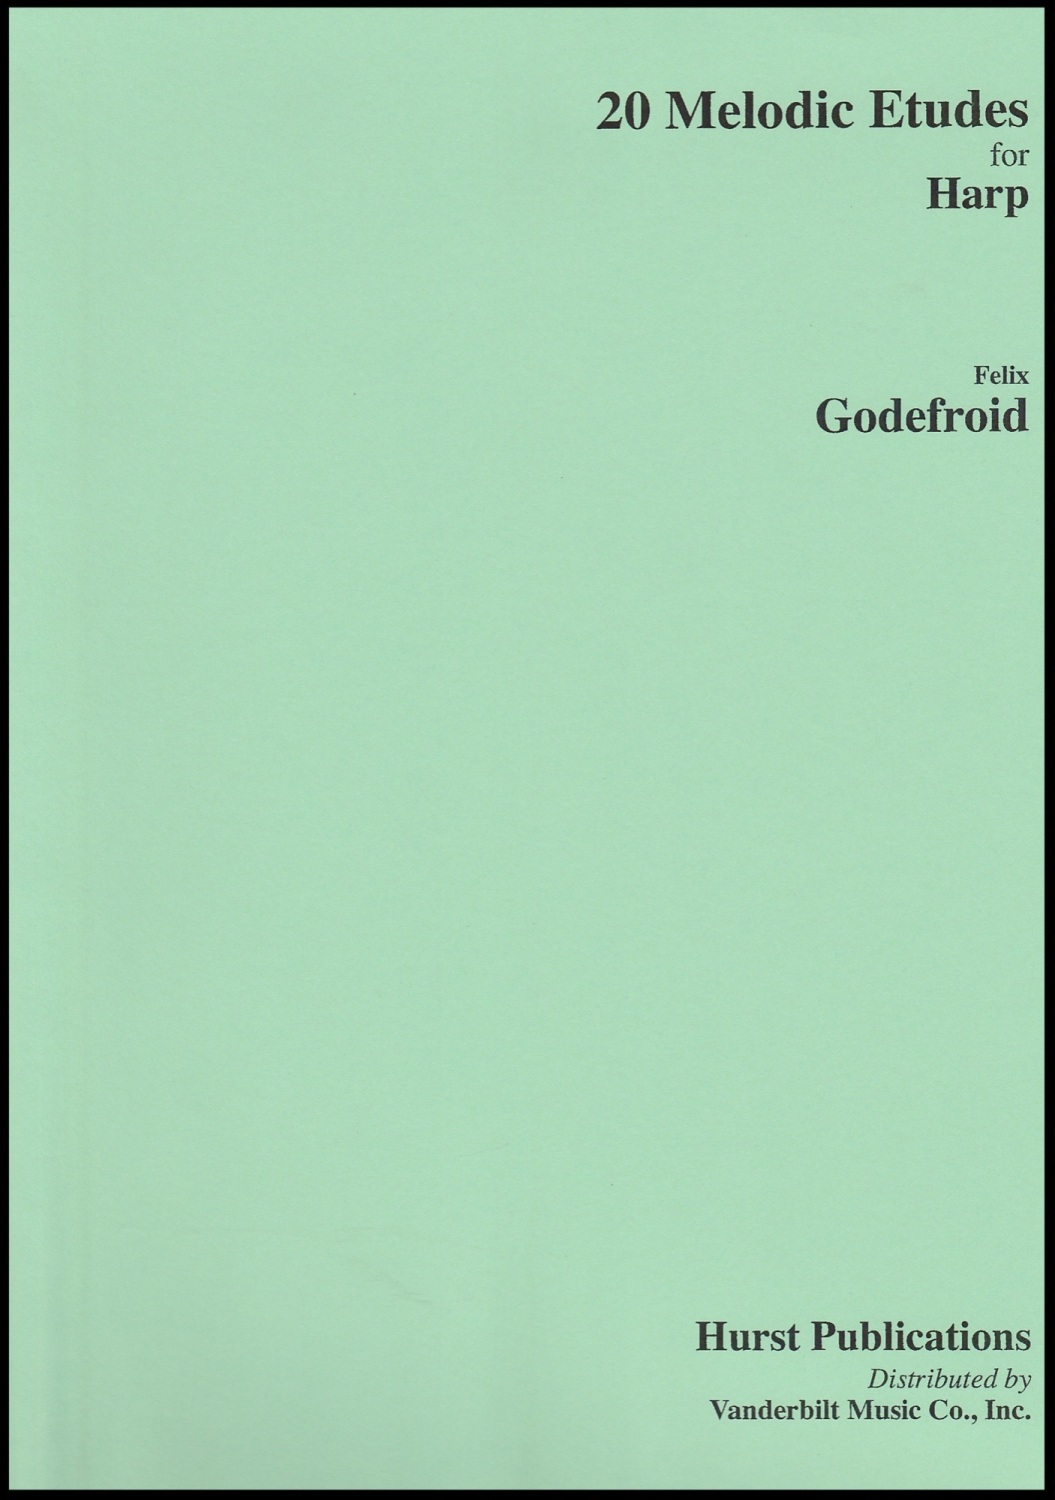 20 Melodic Etudes for Harp - Felix Godefroid